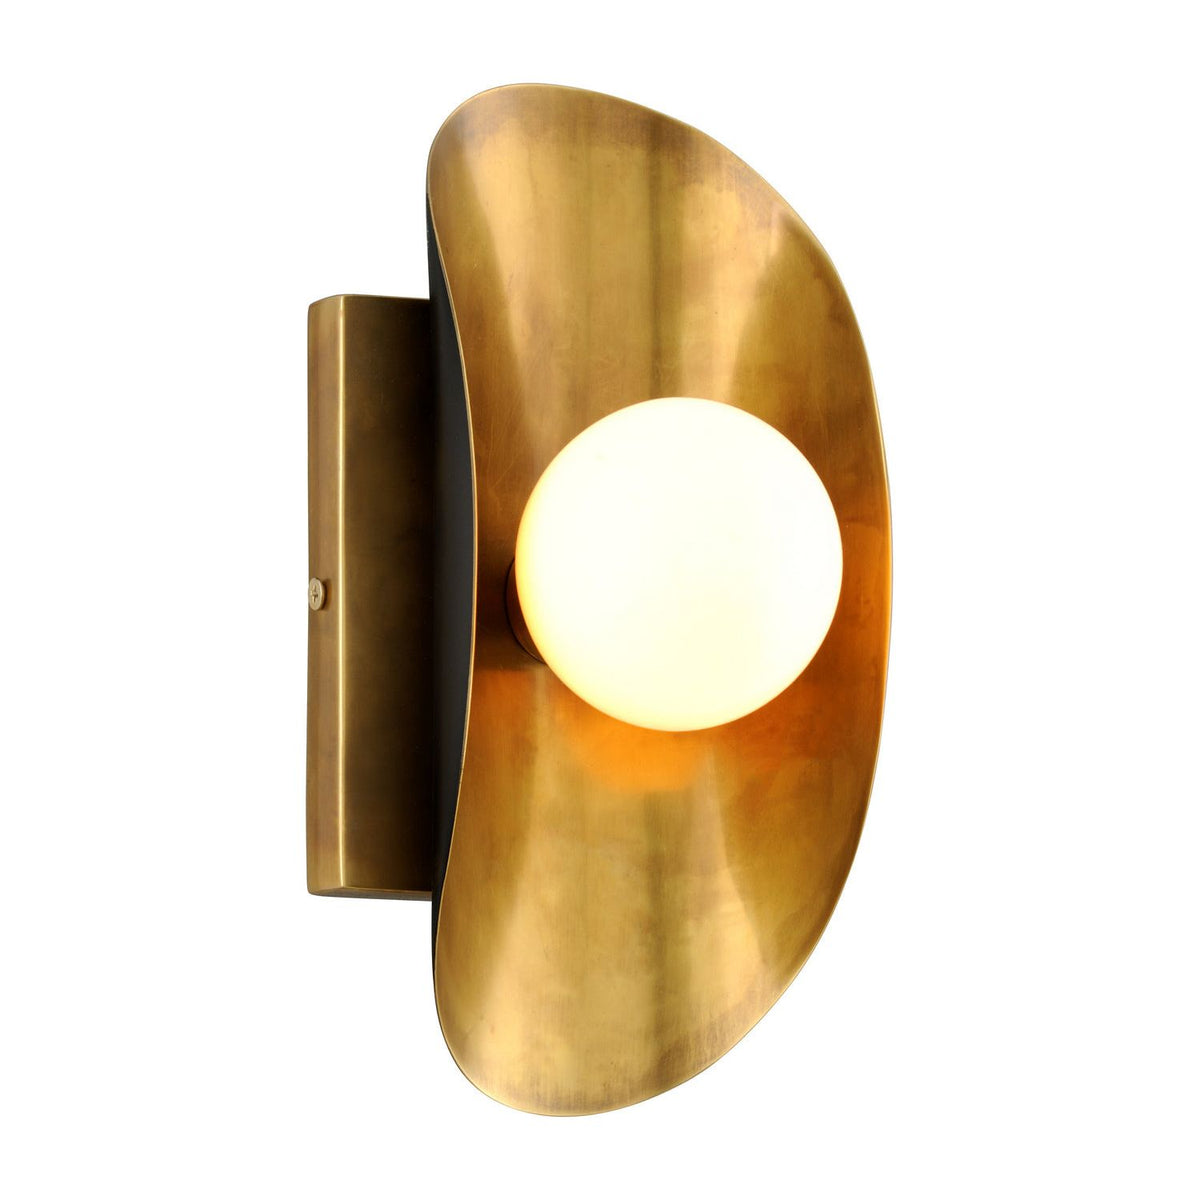 Corbett Lighting - 271-11-VB/BBR - One Light Wall Sconce - Hopper - Vintage Brass Bronze Accents